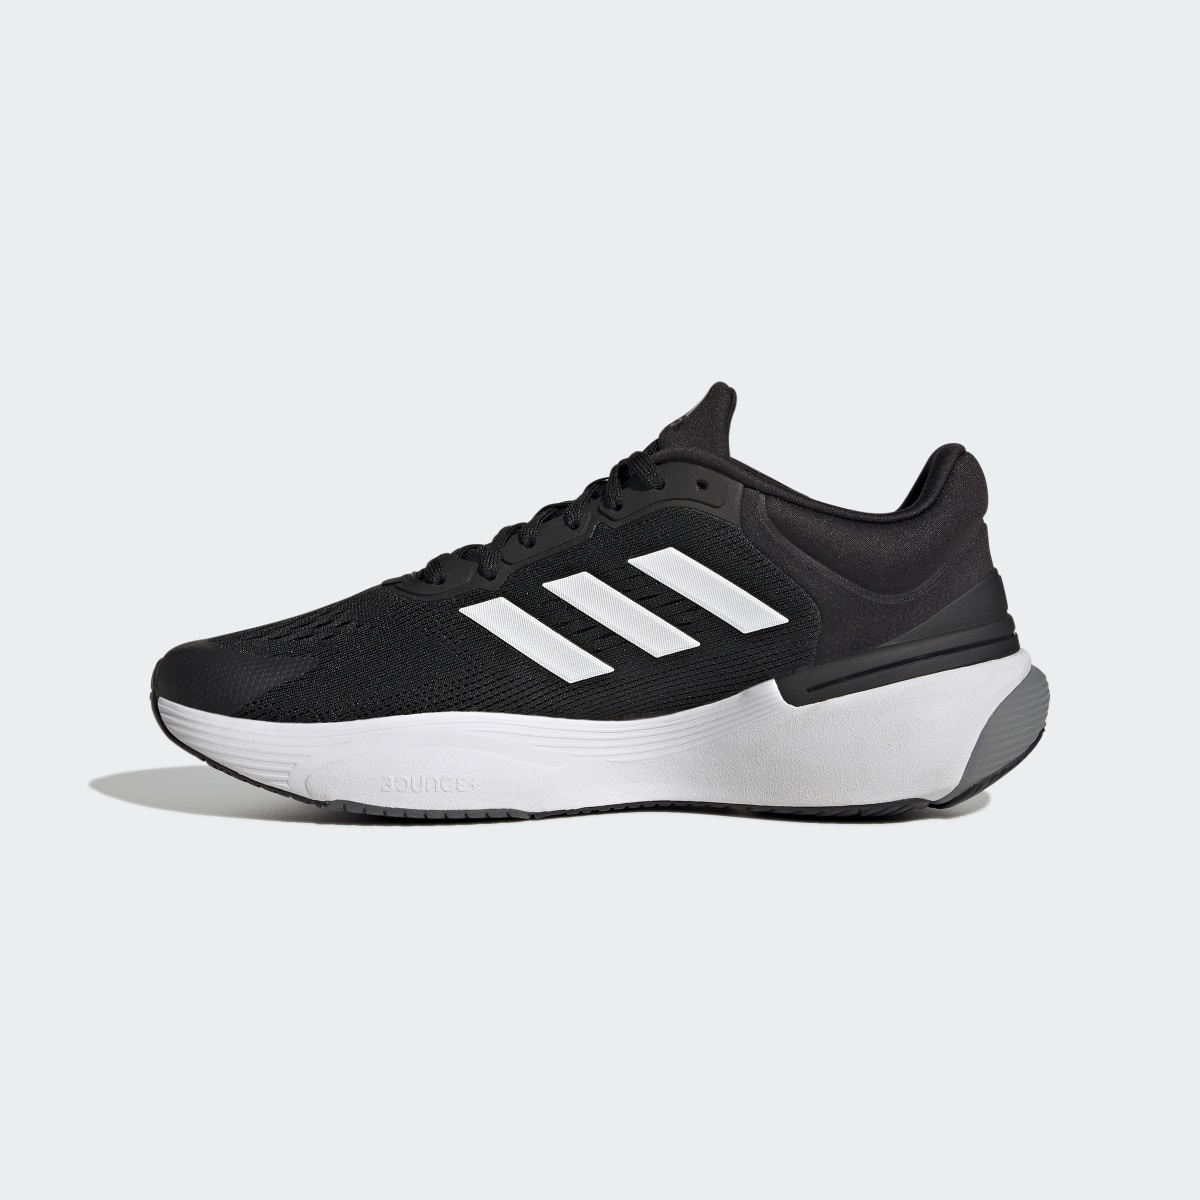 Adidas Response Super 3.0 Running Shoes. 7